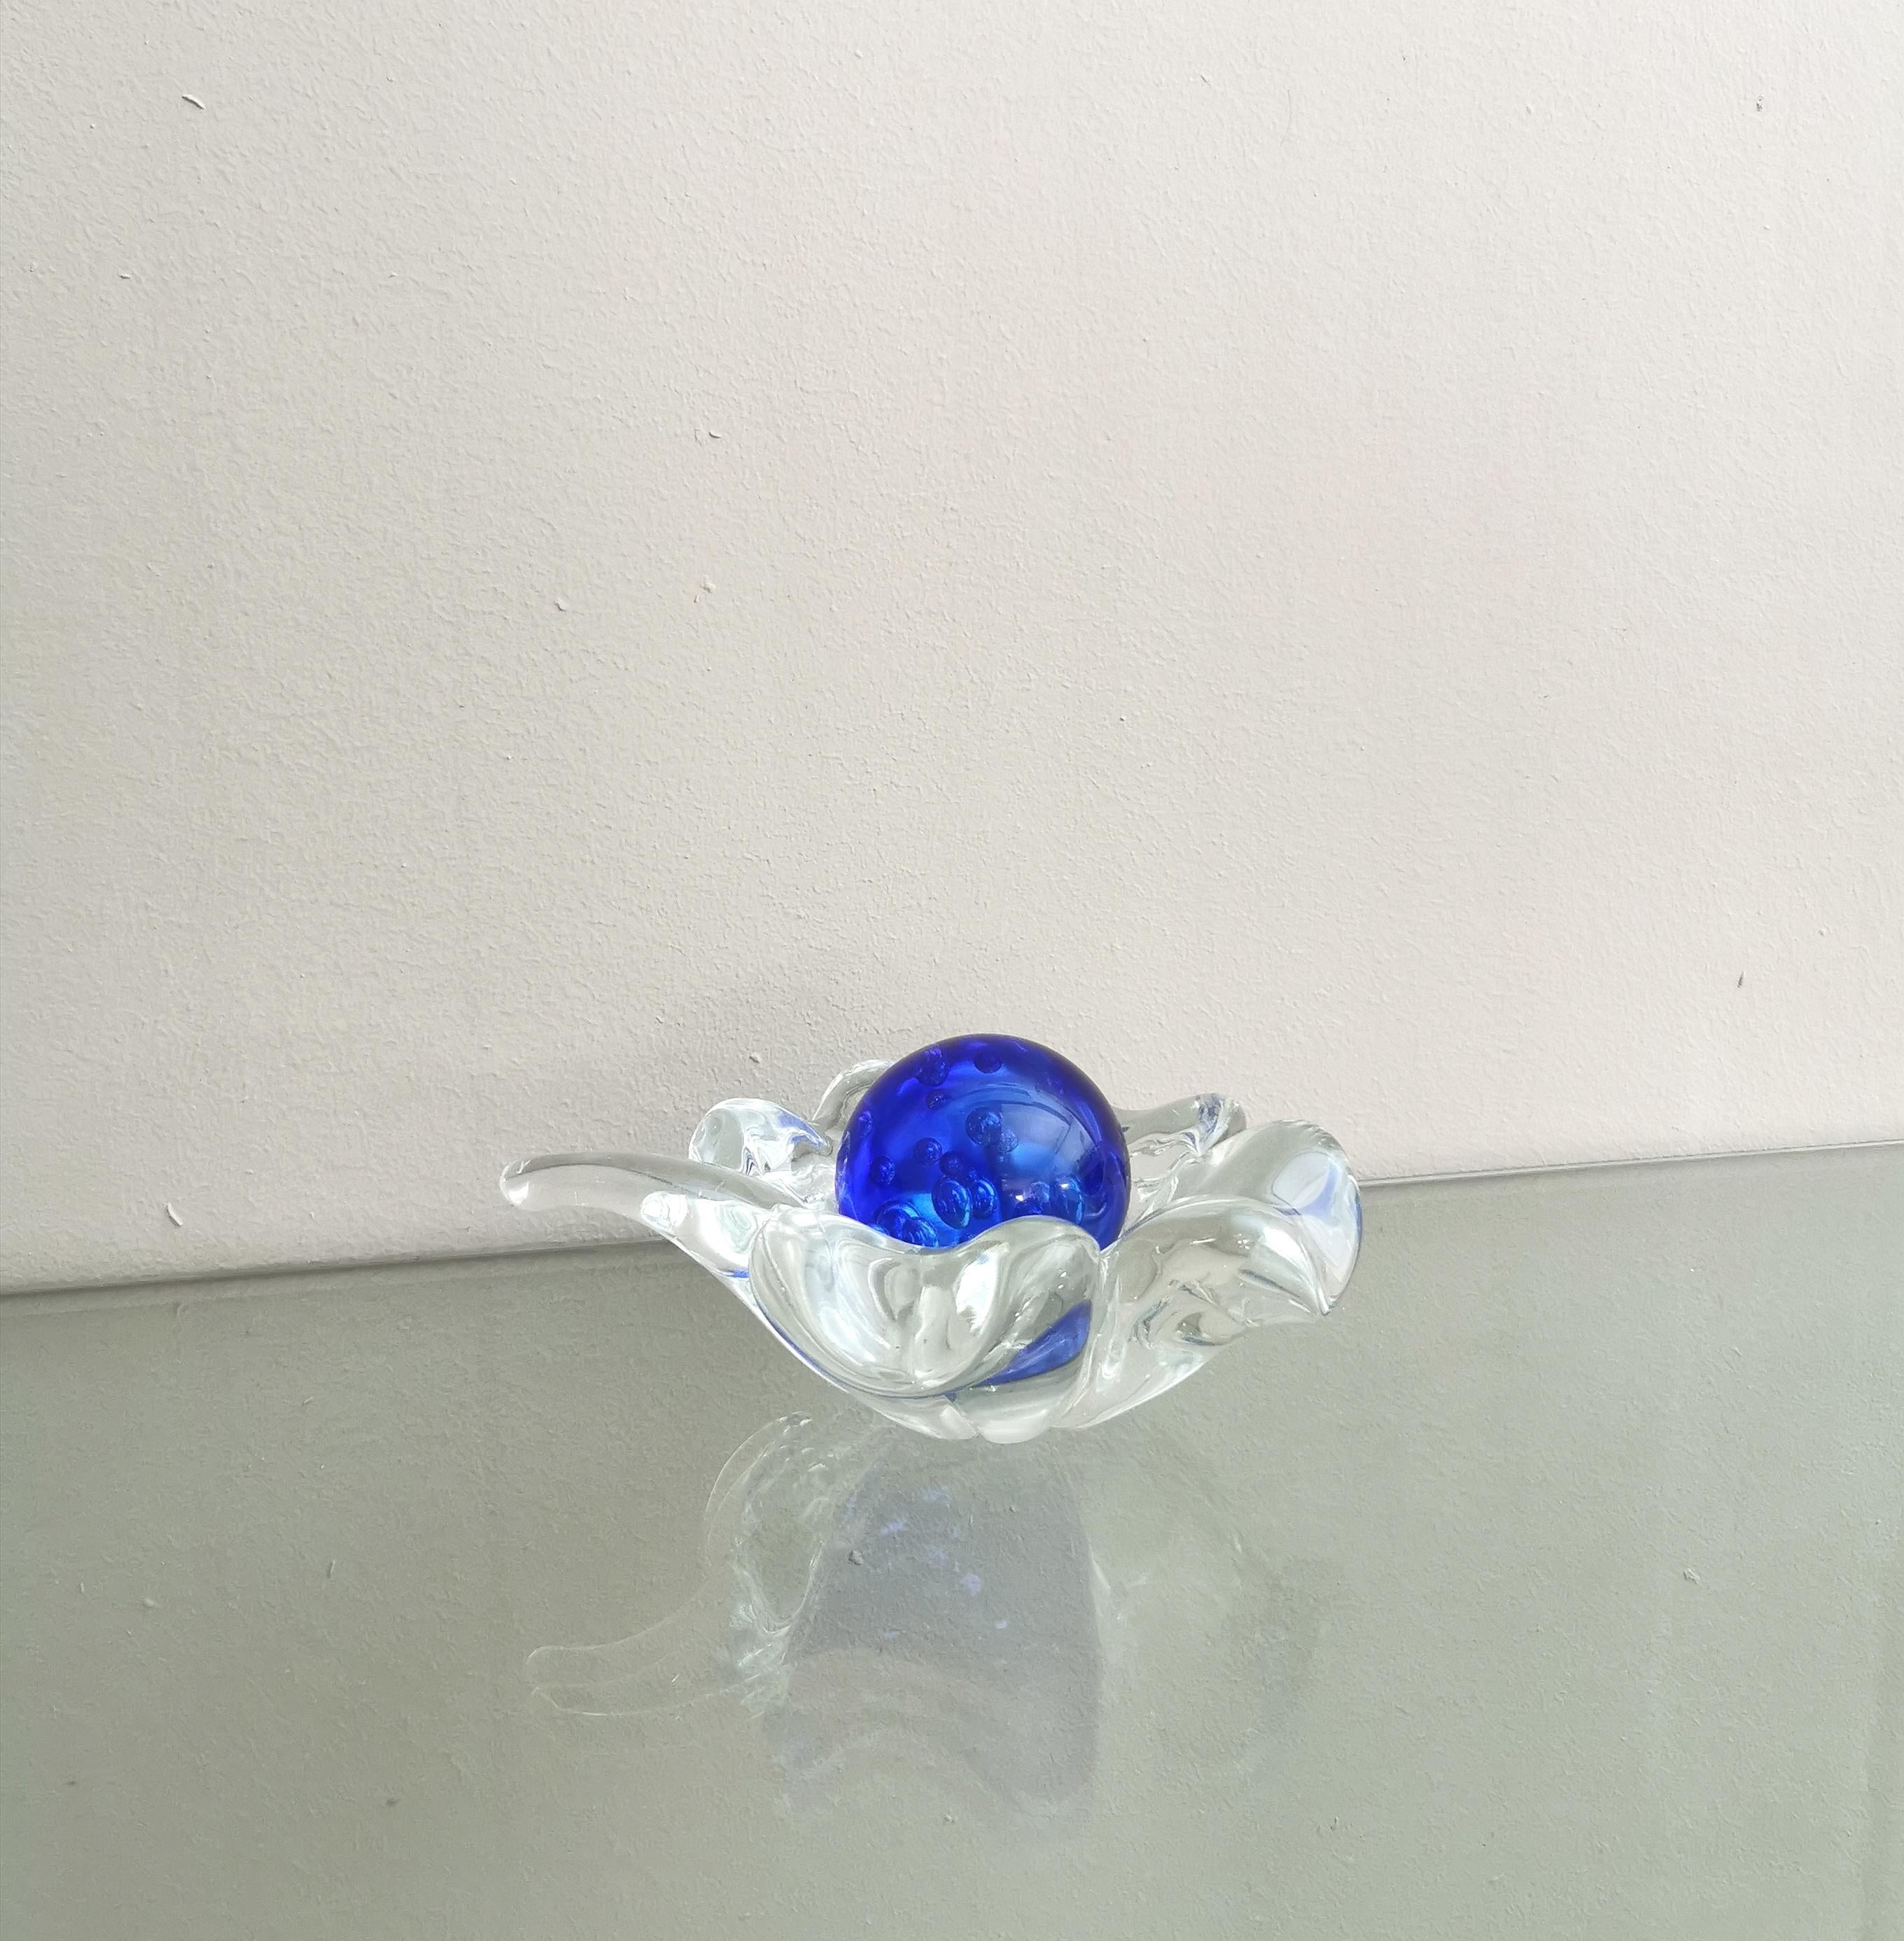 20th Century Midcentury Murano Glass Decorative Object Flavio Poli Blue Italian Design 1970s